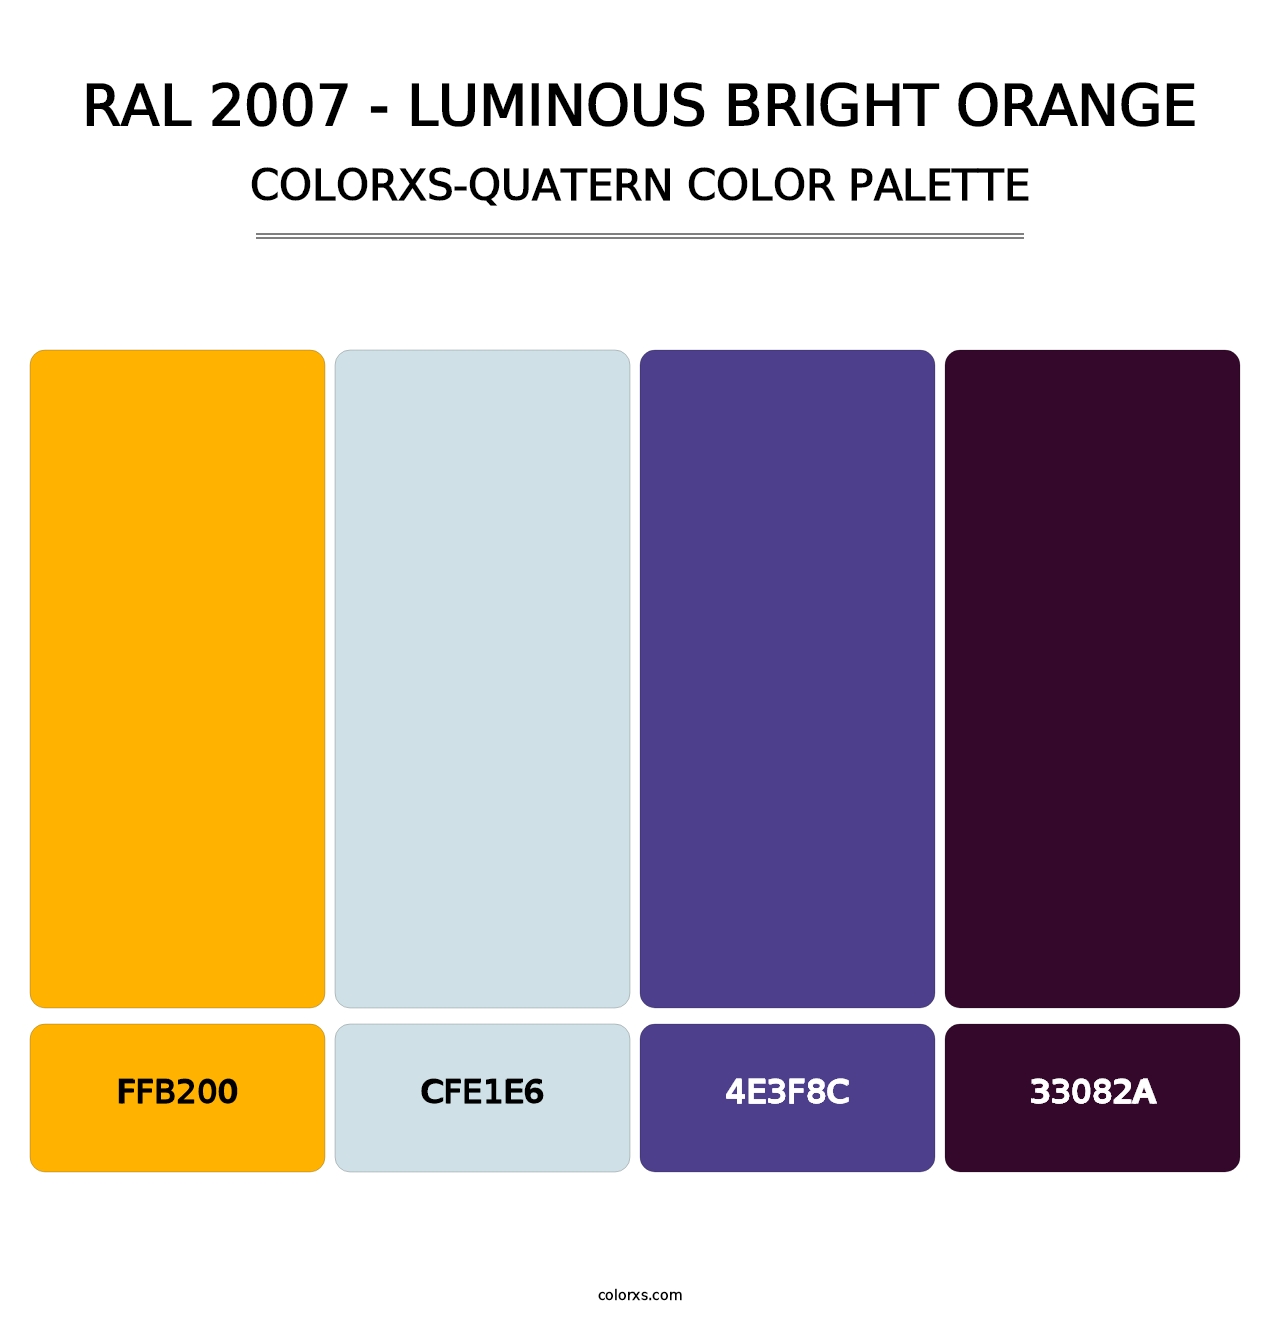 RAL 2007 - Luminous Bright Orange - Colorxs Quatern Palette